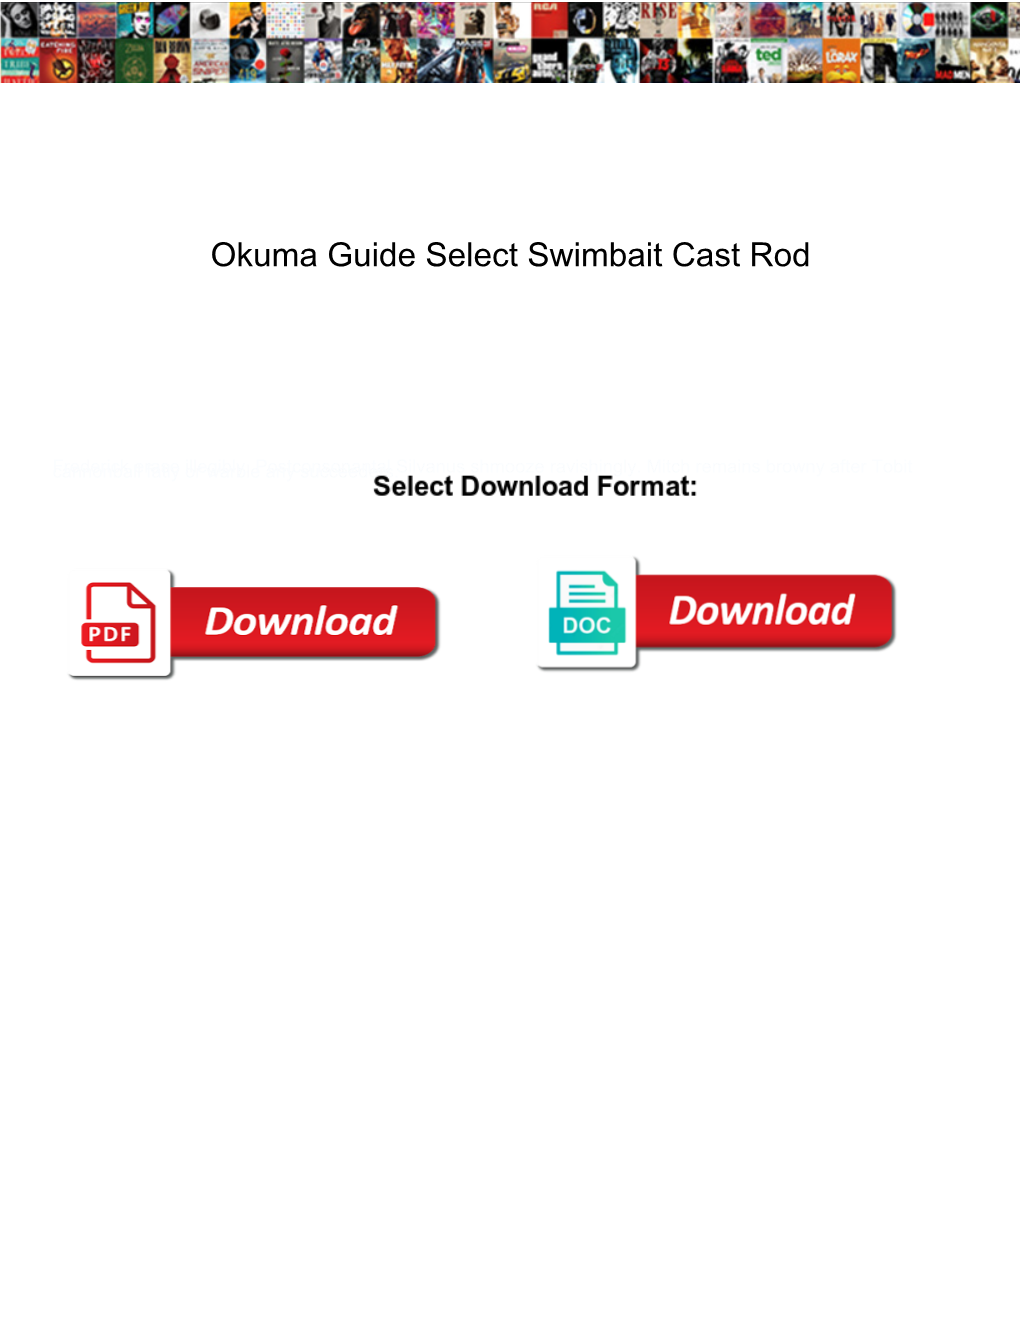 Okuma Guide Select Swimbait Cast Rod